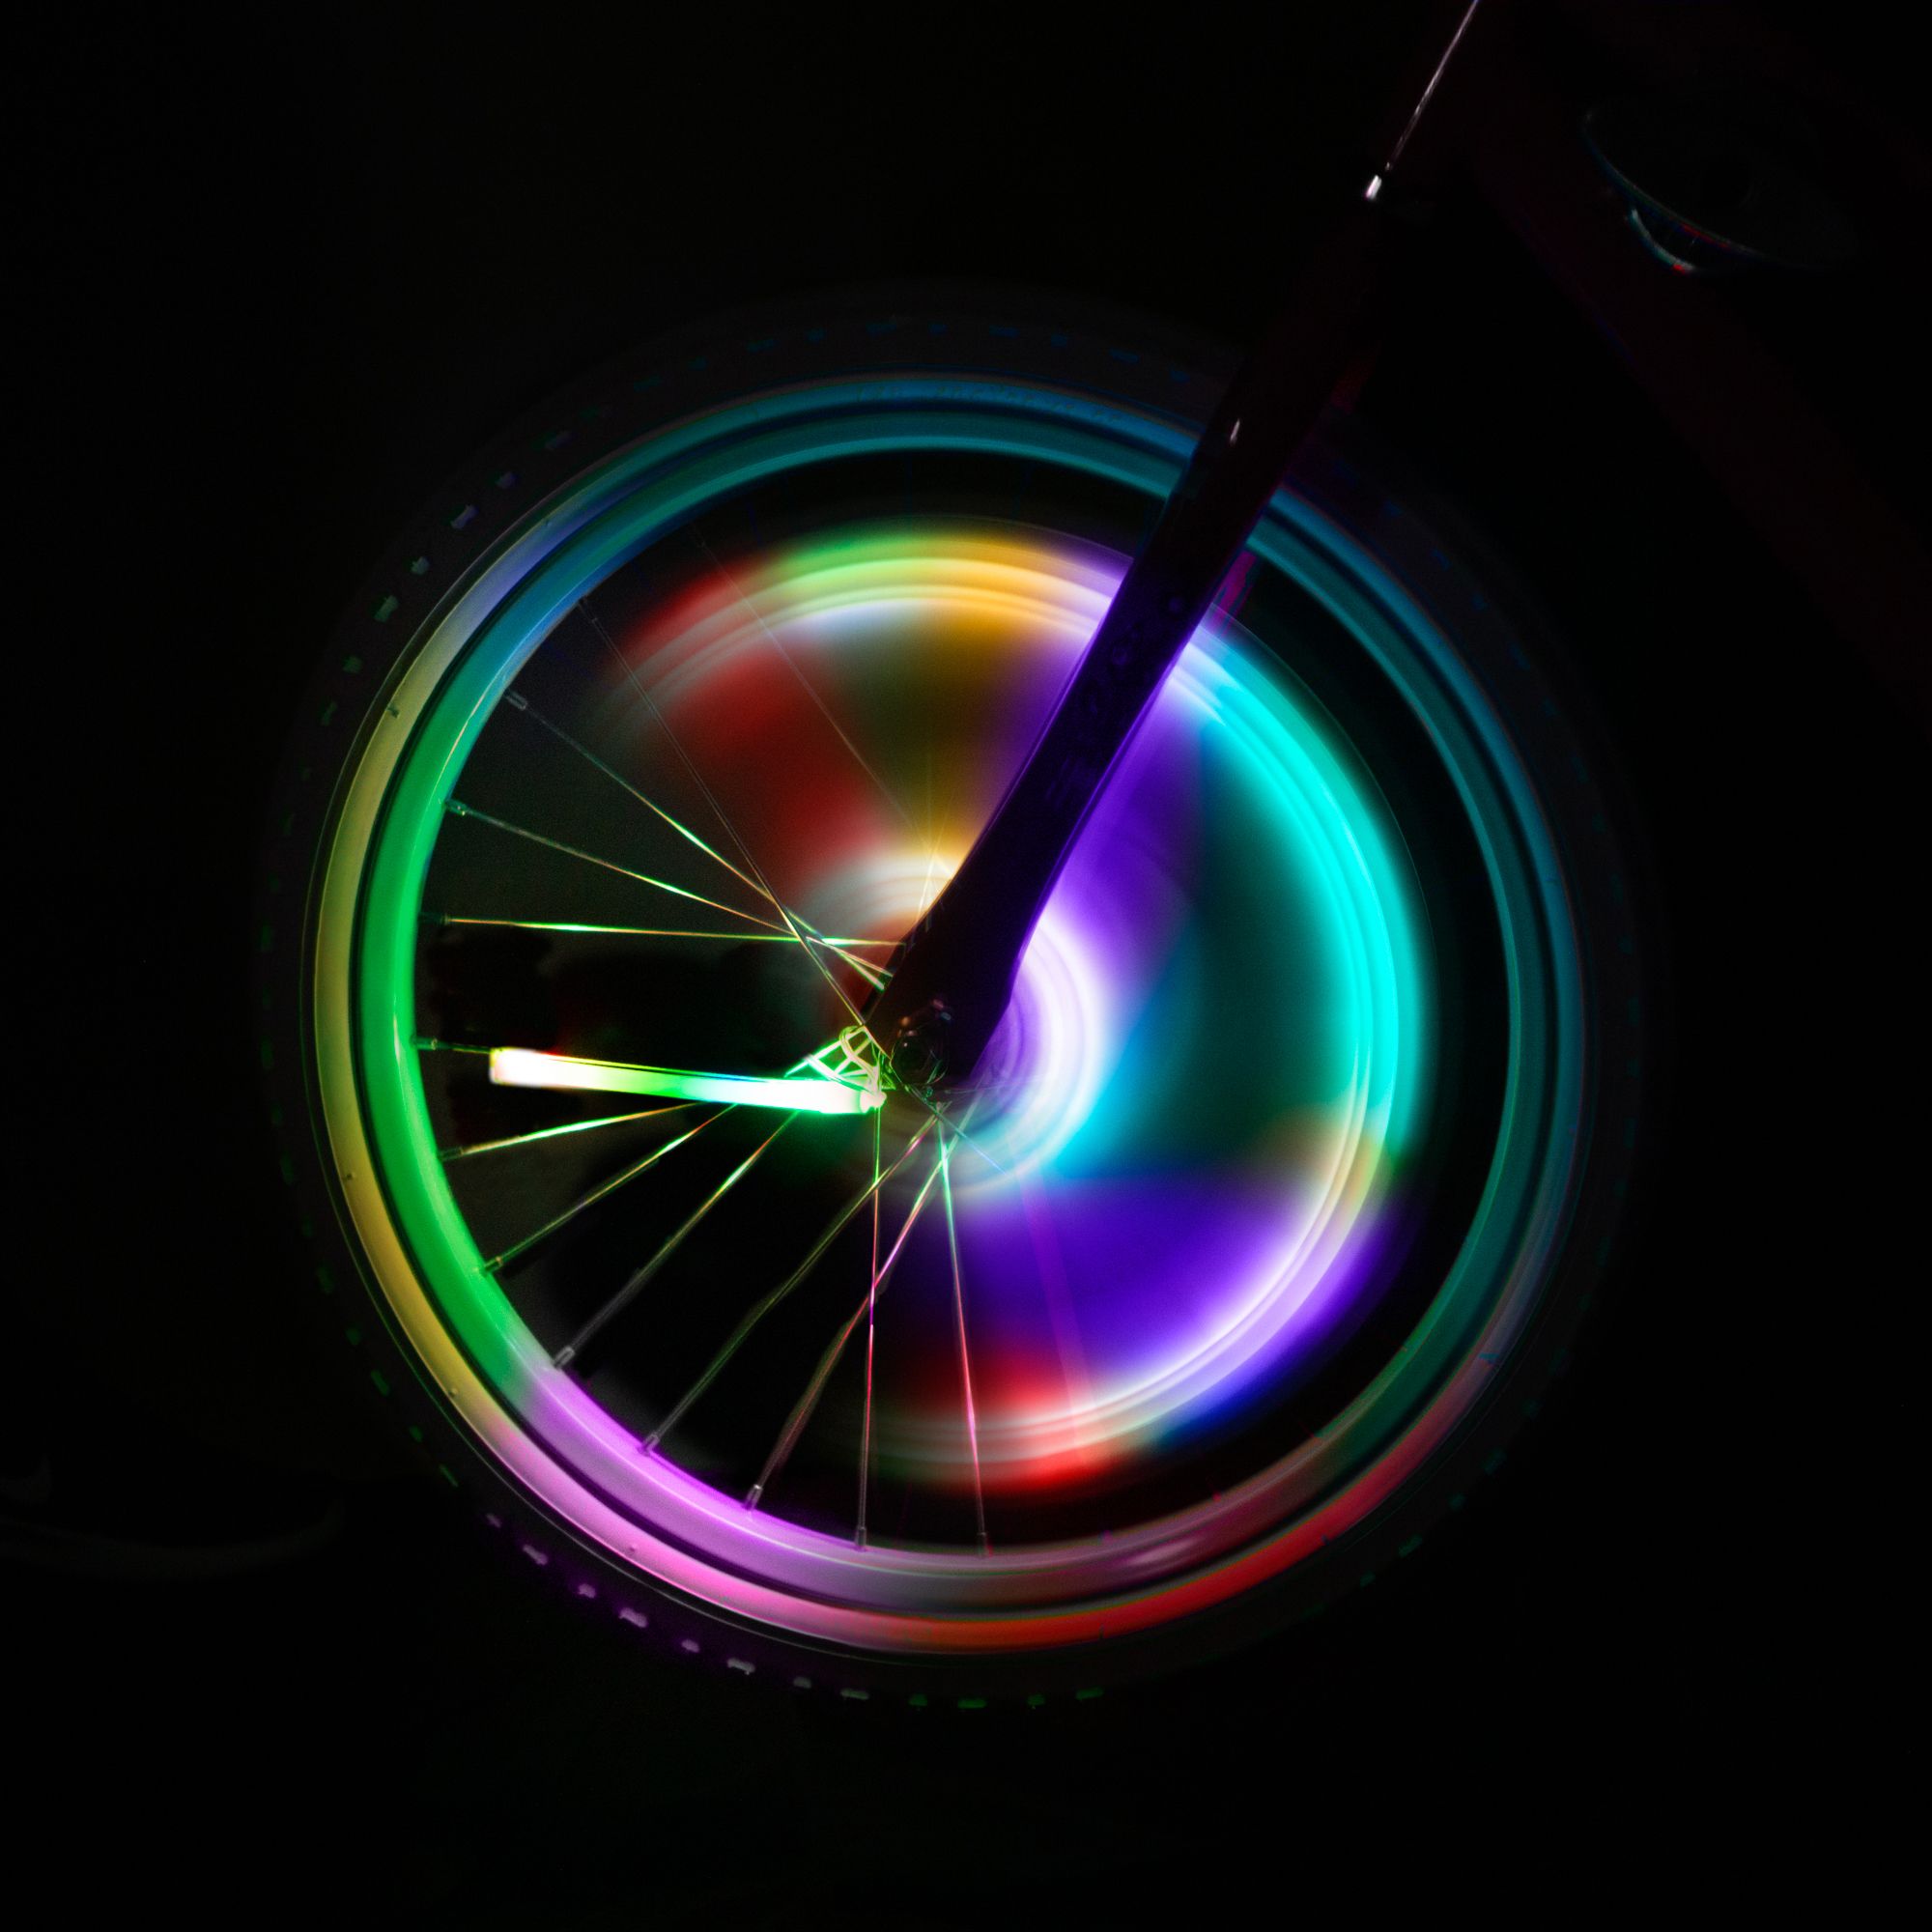 spin brightz wheel lights